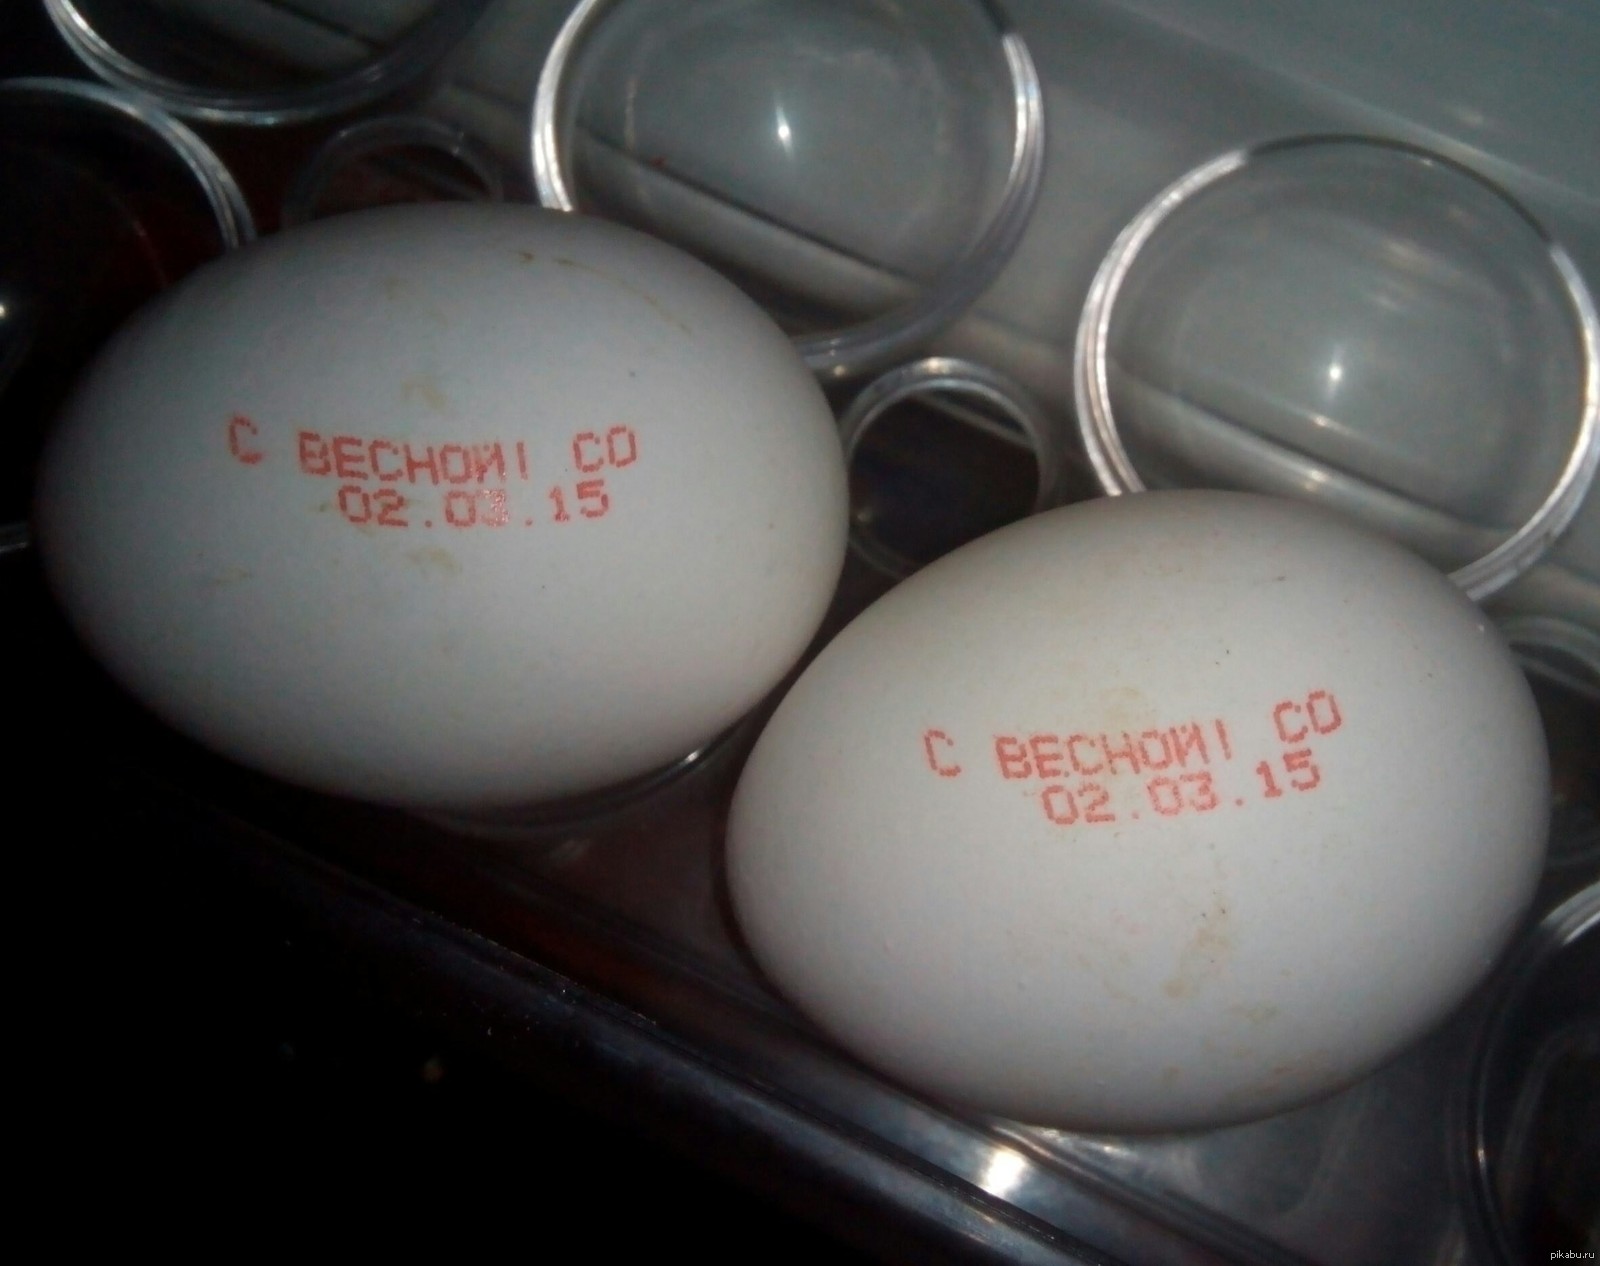 Про мужскую яйцо. Яйцо надпись. Яйцо с надписью яйцо. Смешные надписи на яйцах. Табличка домашние яйца.